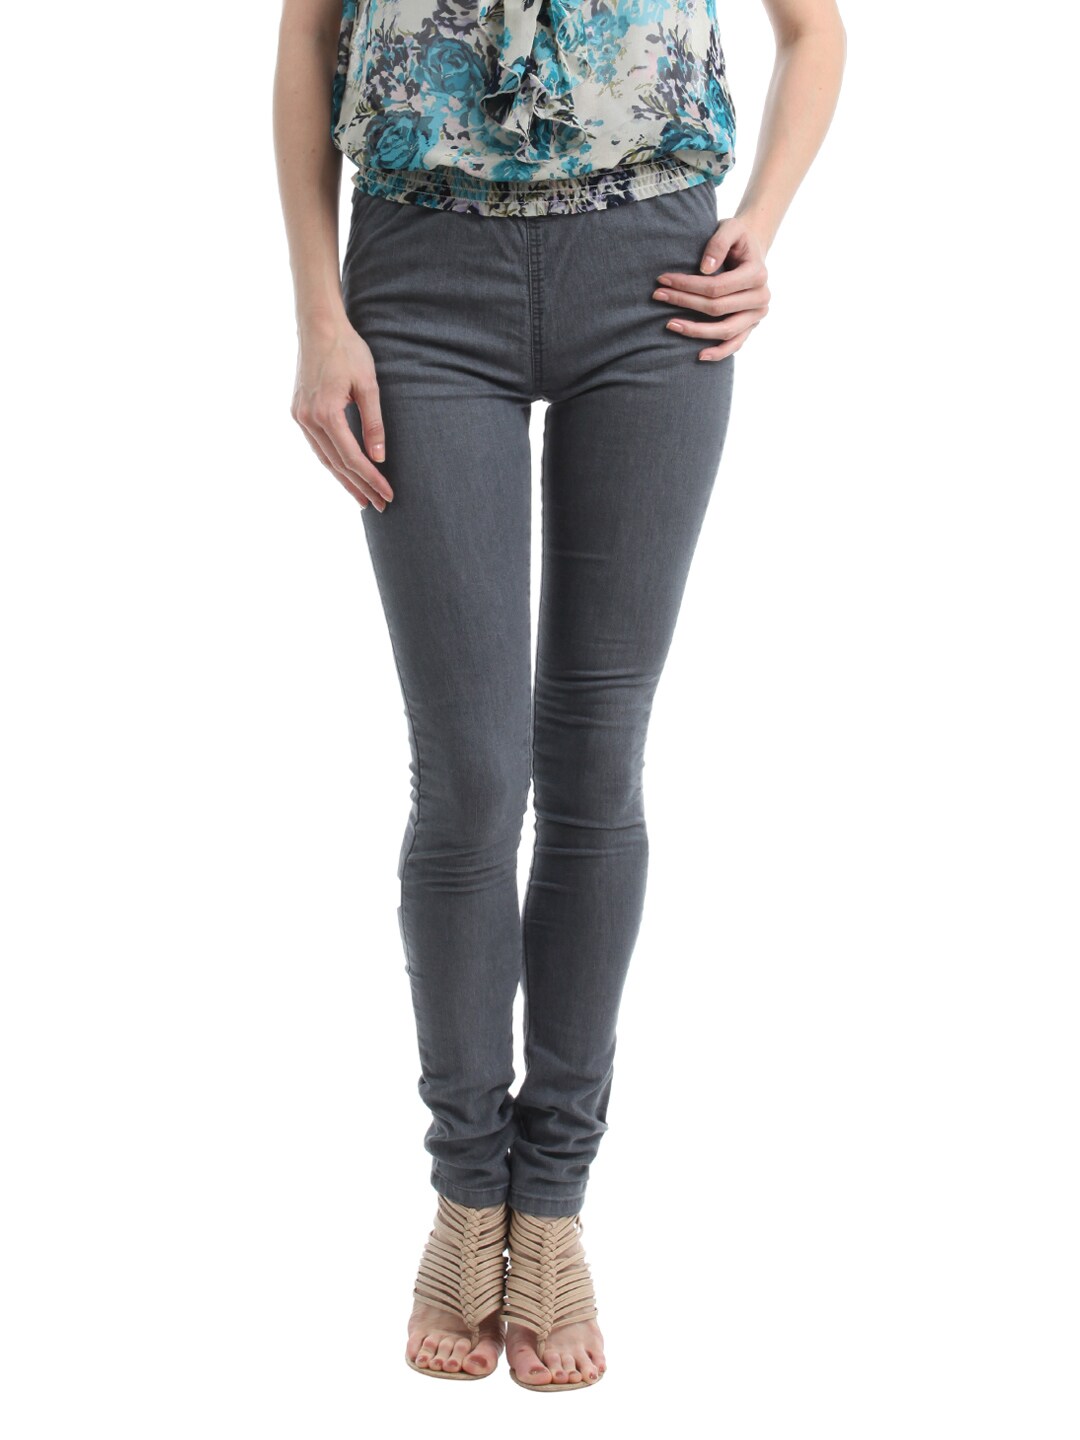 Kraus Jeans Women Grey leggings